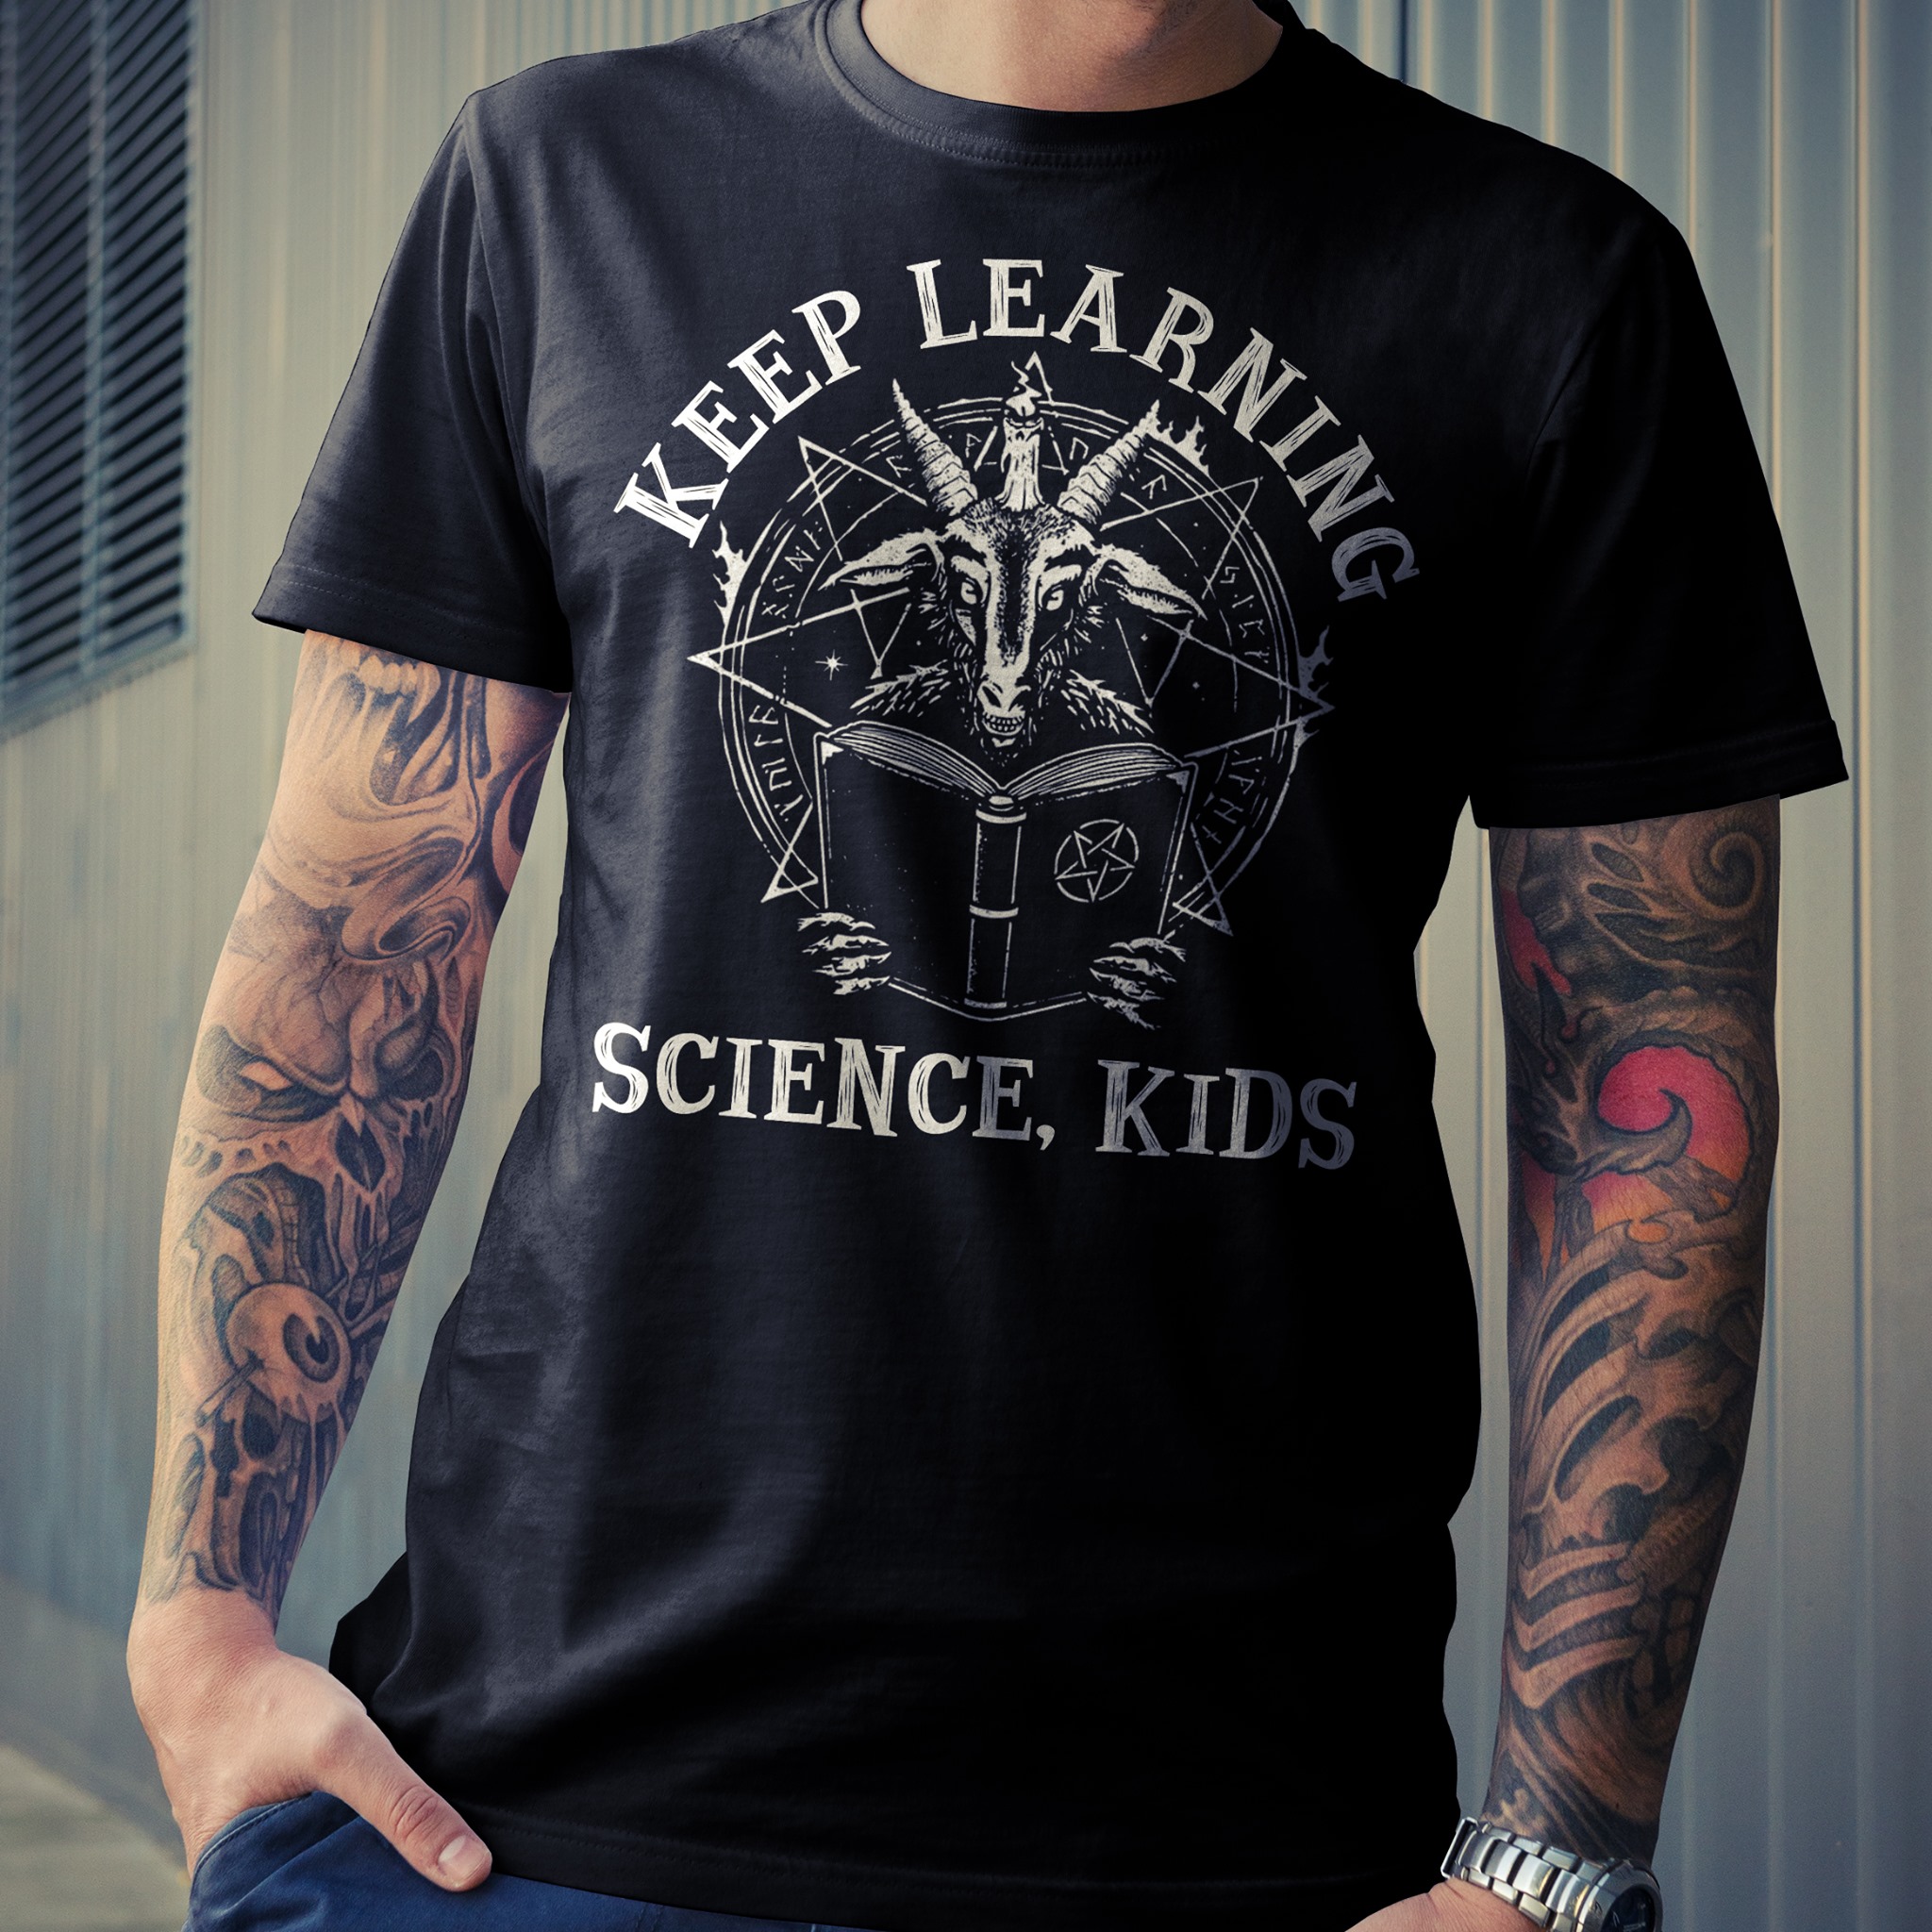 Keep learning science, kids - Ghost satan